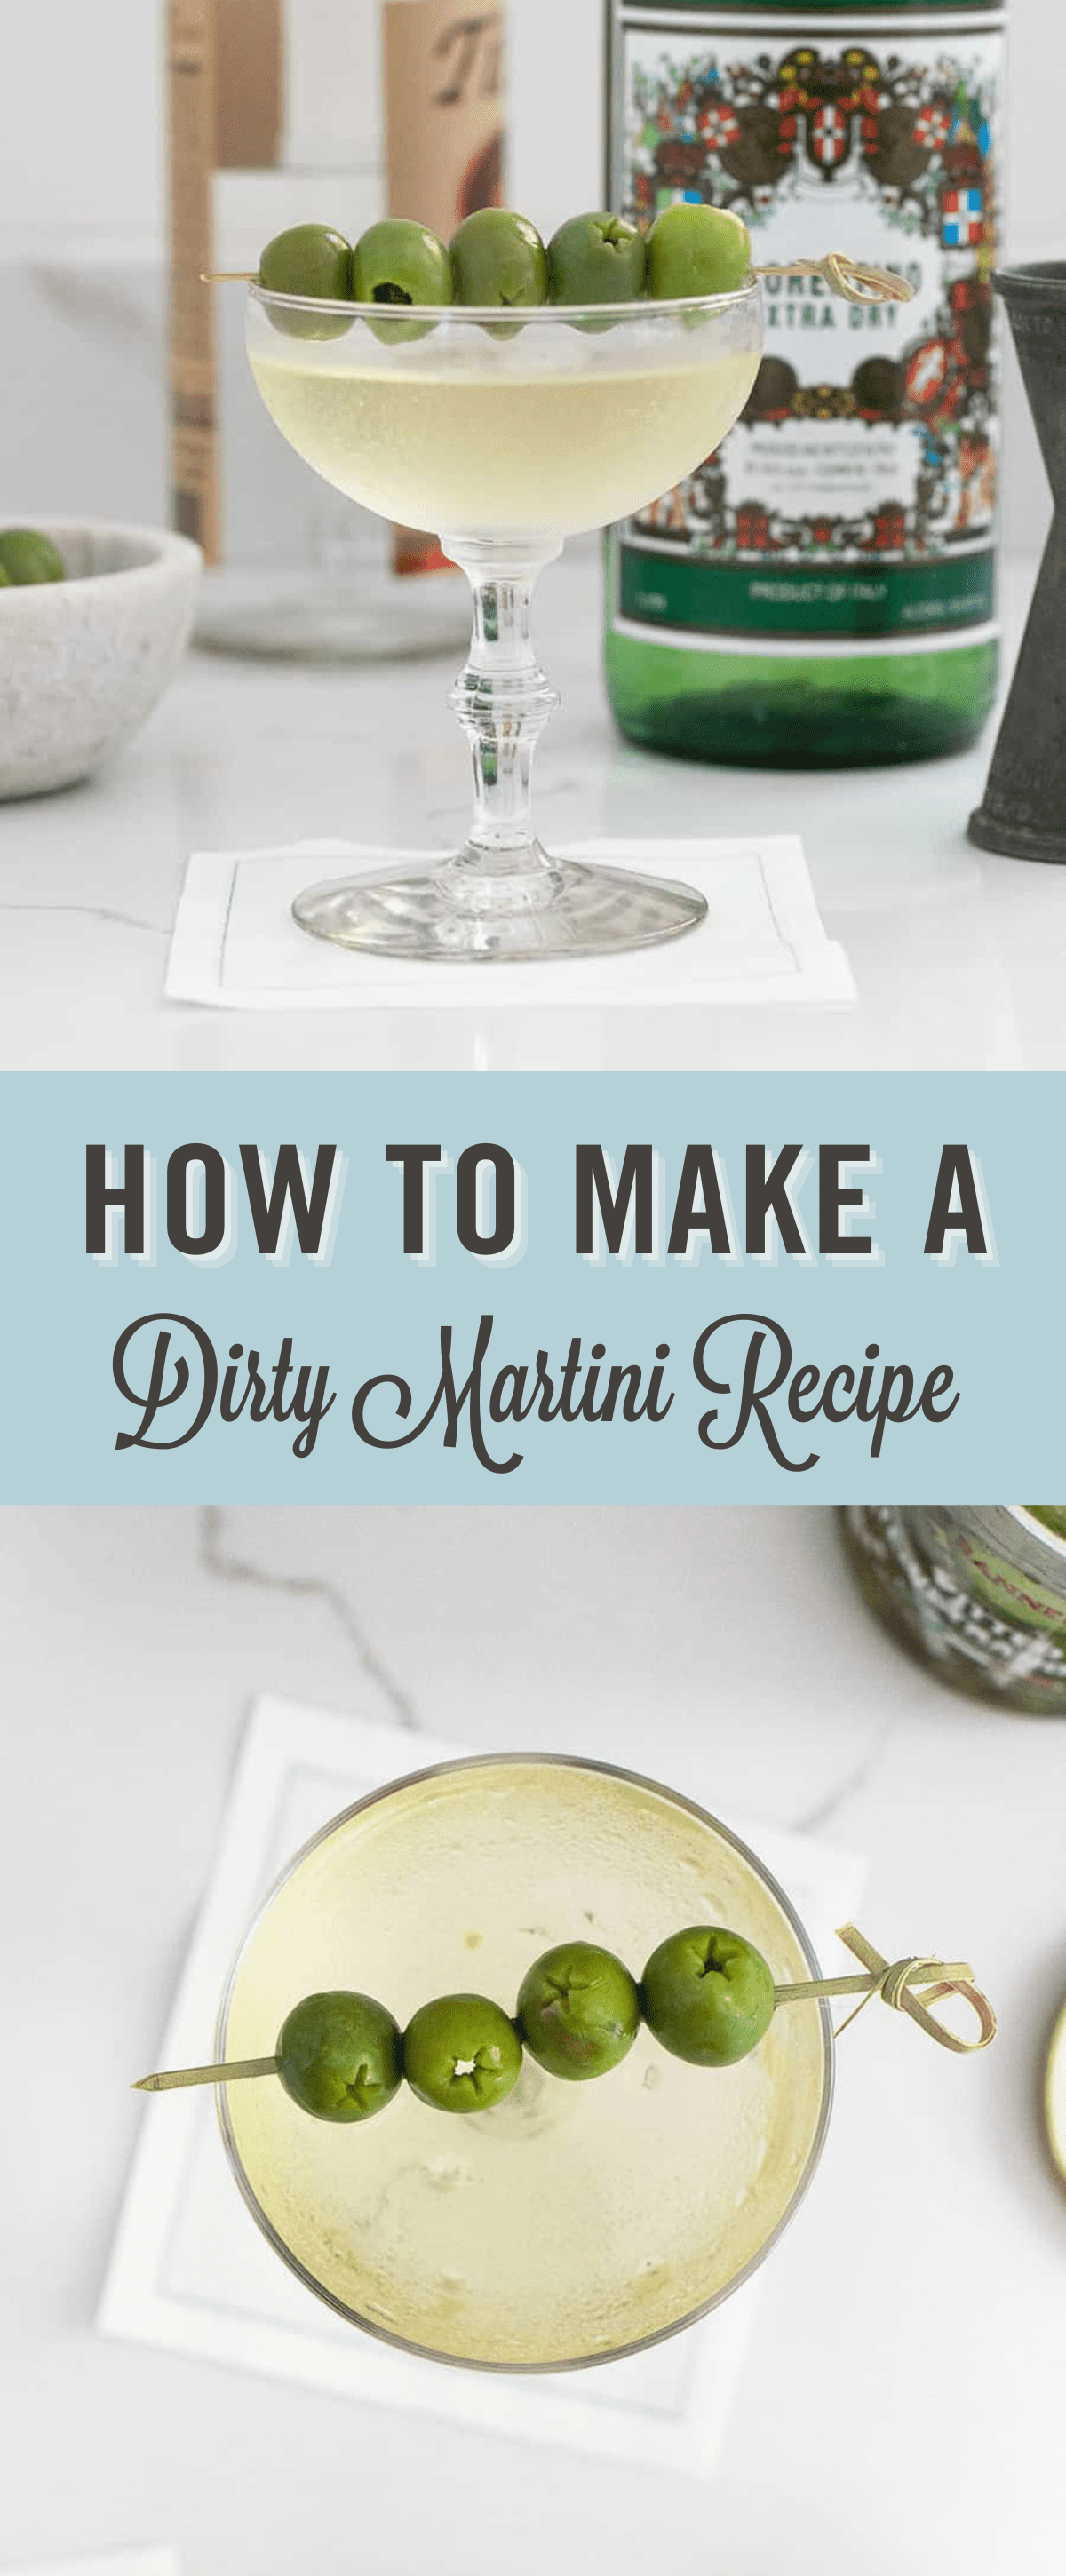 Dirty martini recipe.